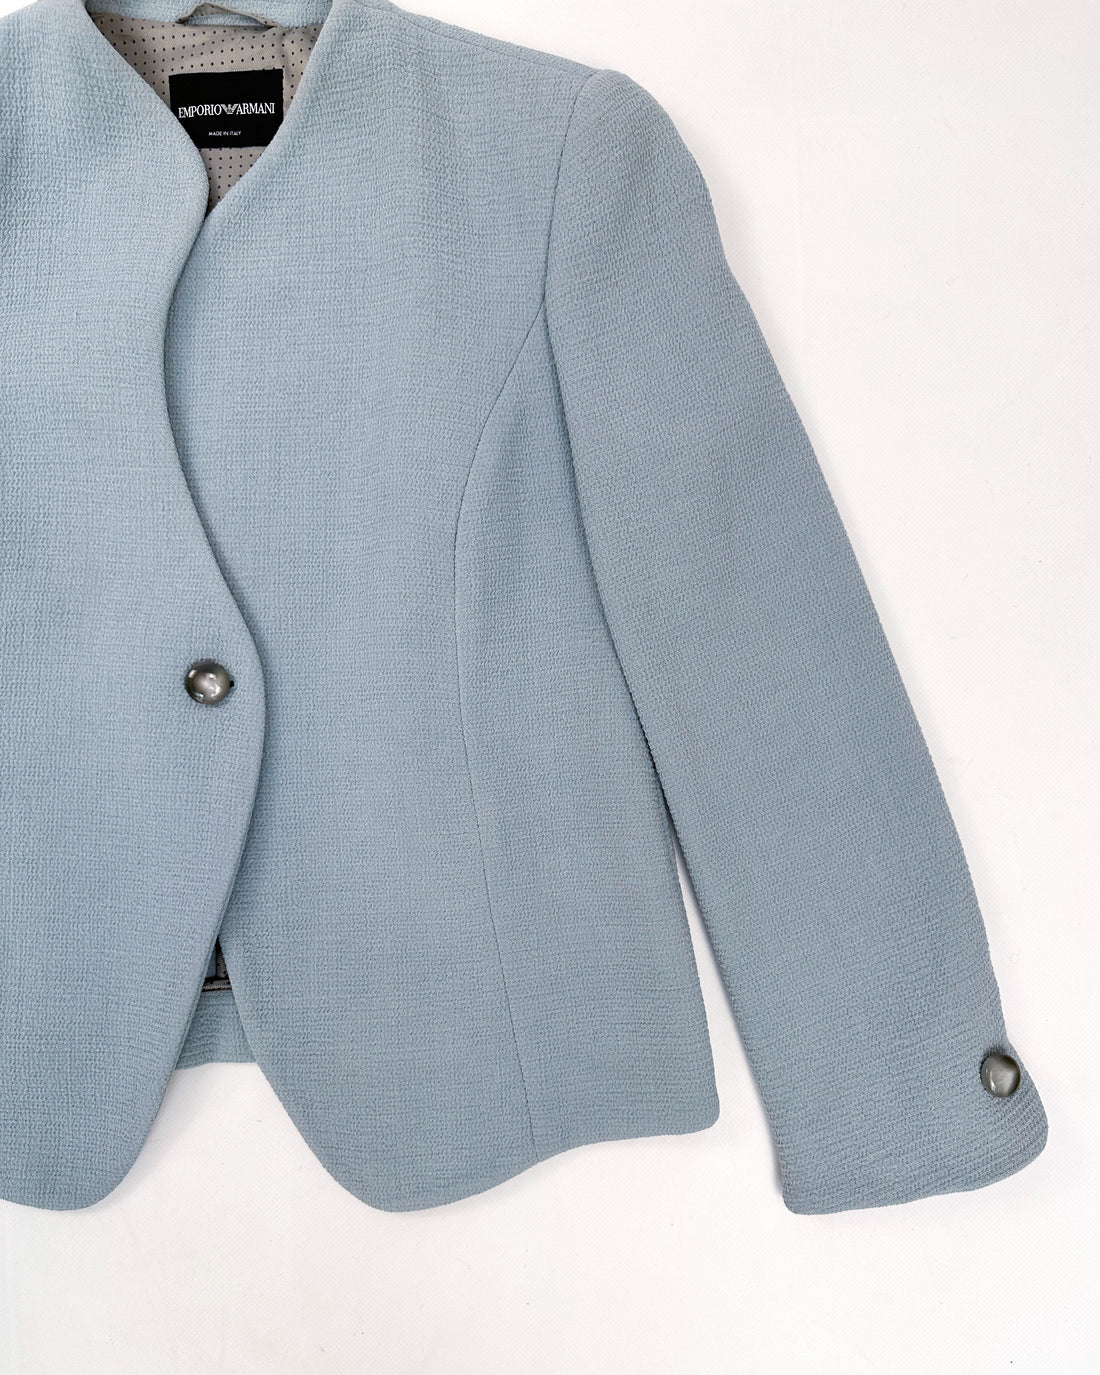 Armani Wool Blue "S" Puzzle Button Jacket 2016